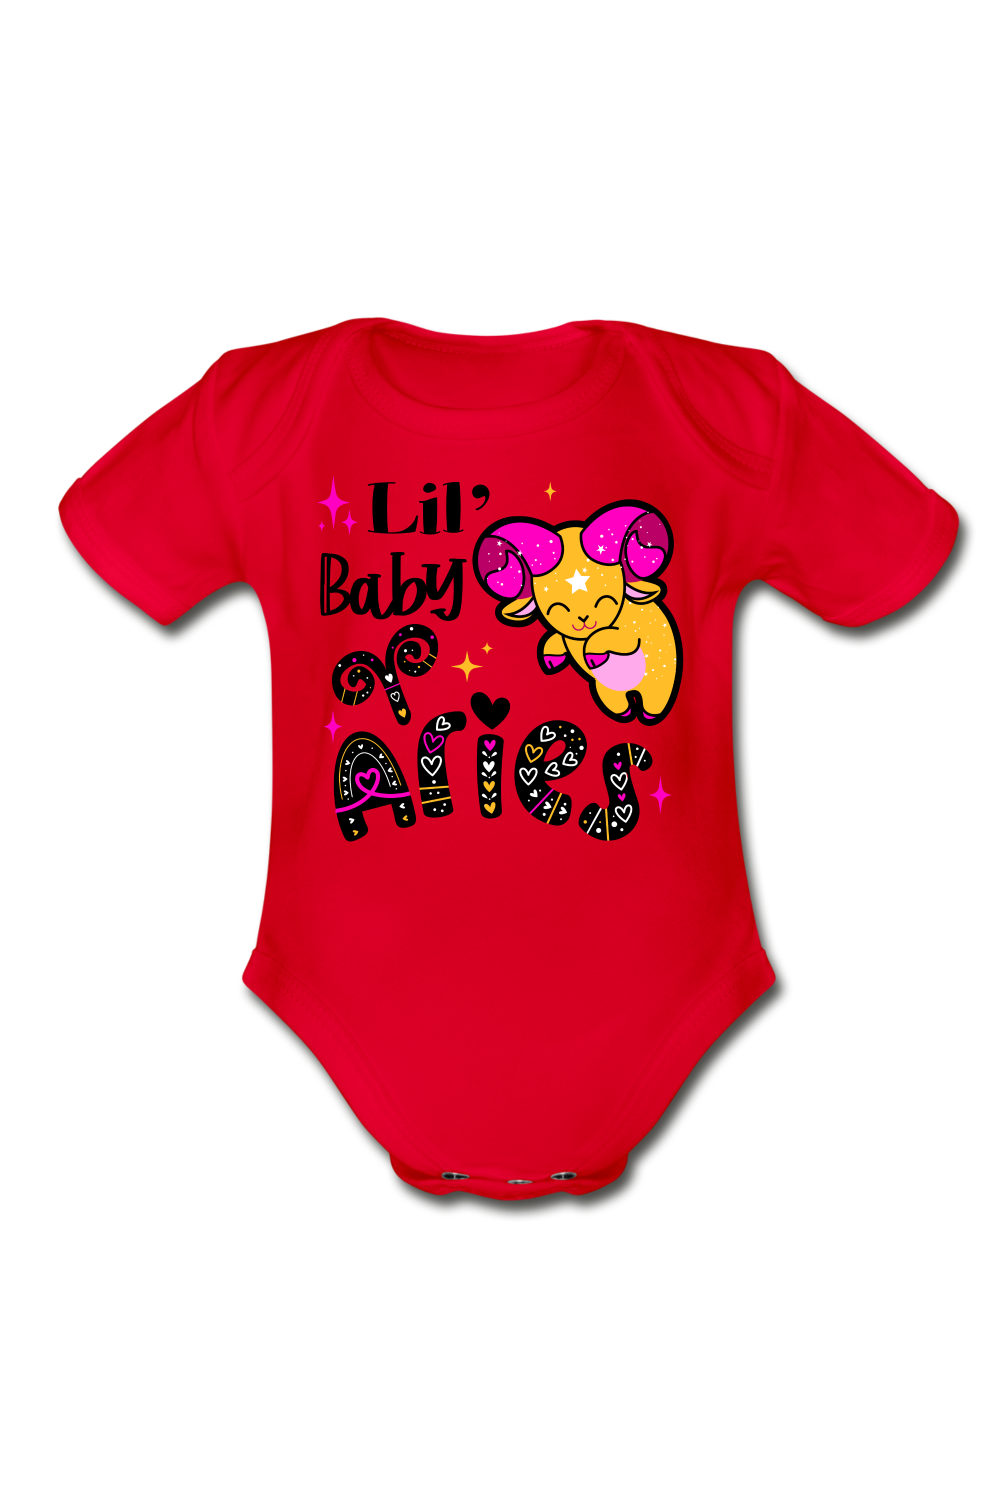 Unisex Baby Short Sleeve Baby Bodysuit - red - NicholesGifts.online